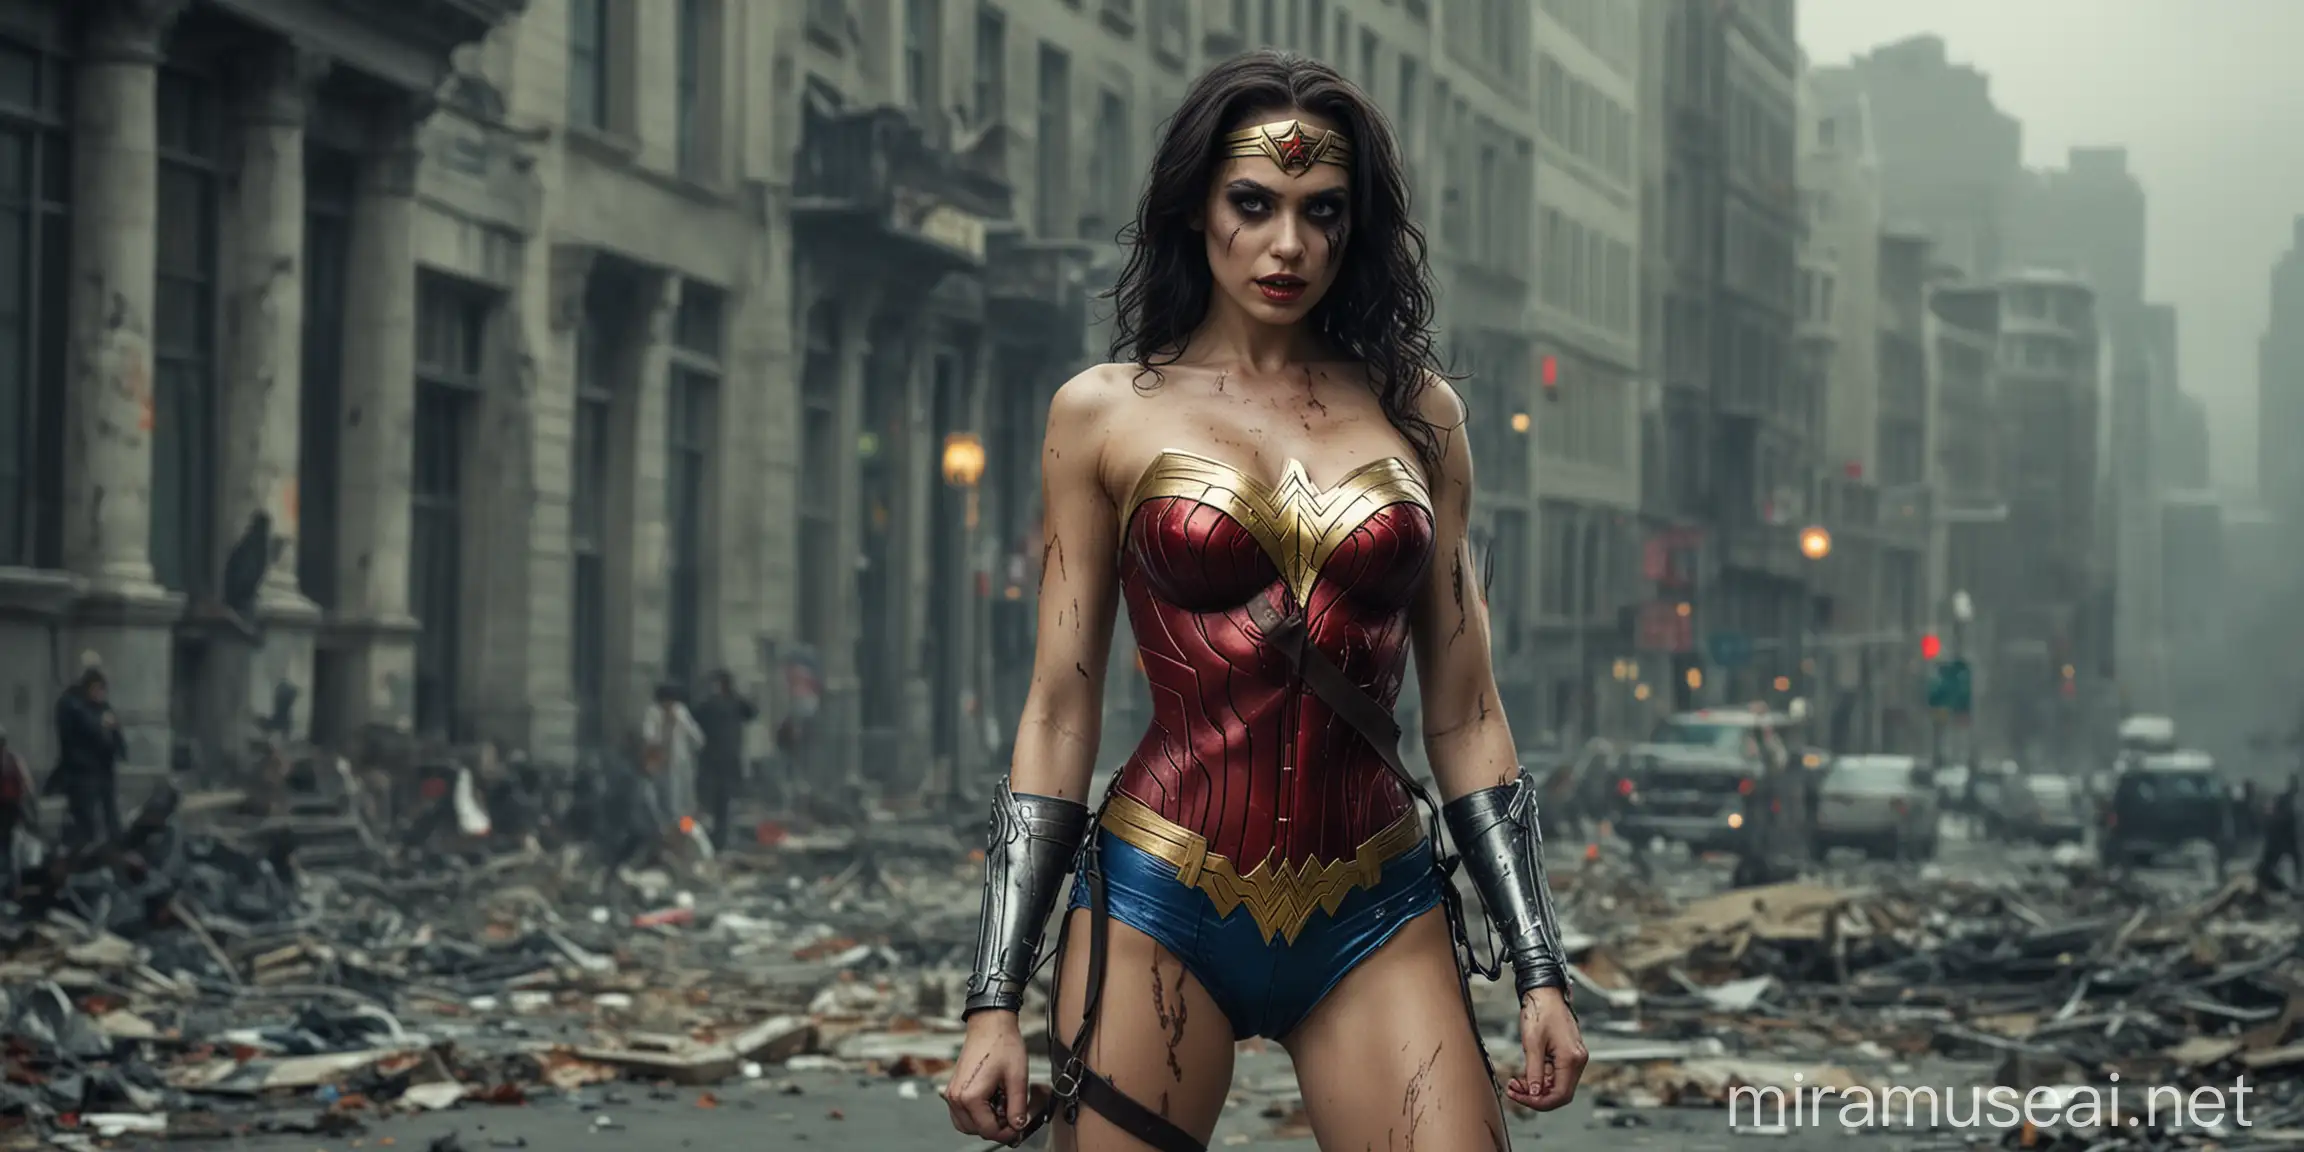 Seductive Zombie Wonder Woman Strolling Through Urban Landscape